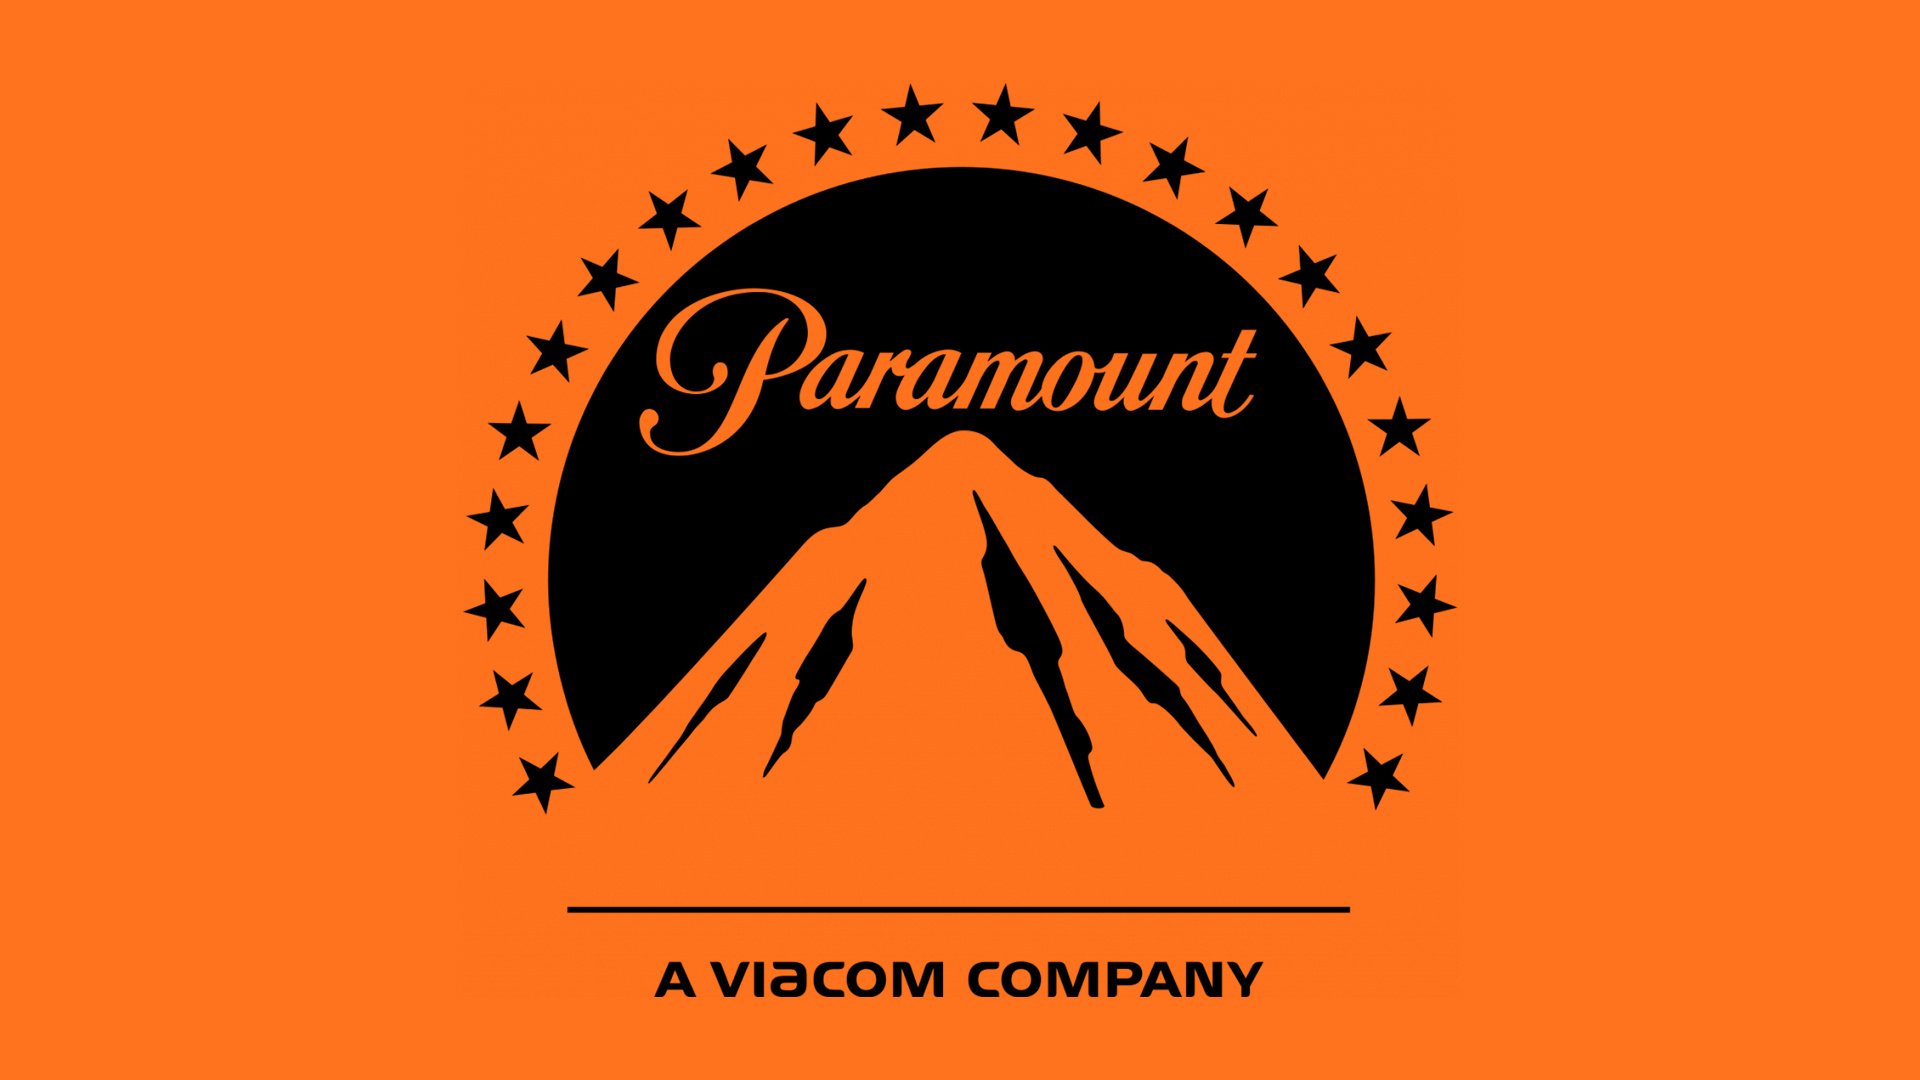 Paramount, Hidden meaning, Logo symbolism, Creative, 1920x1080 Full HD Desktop